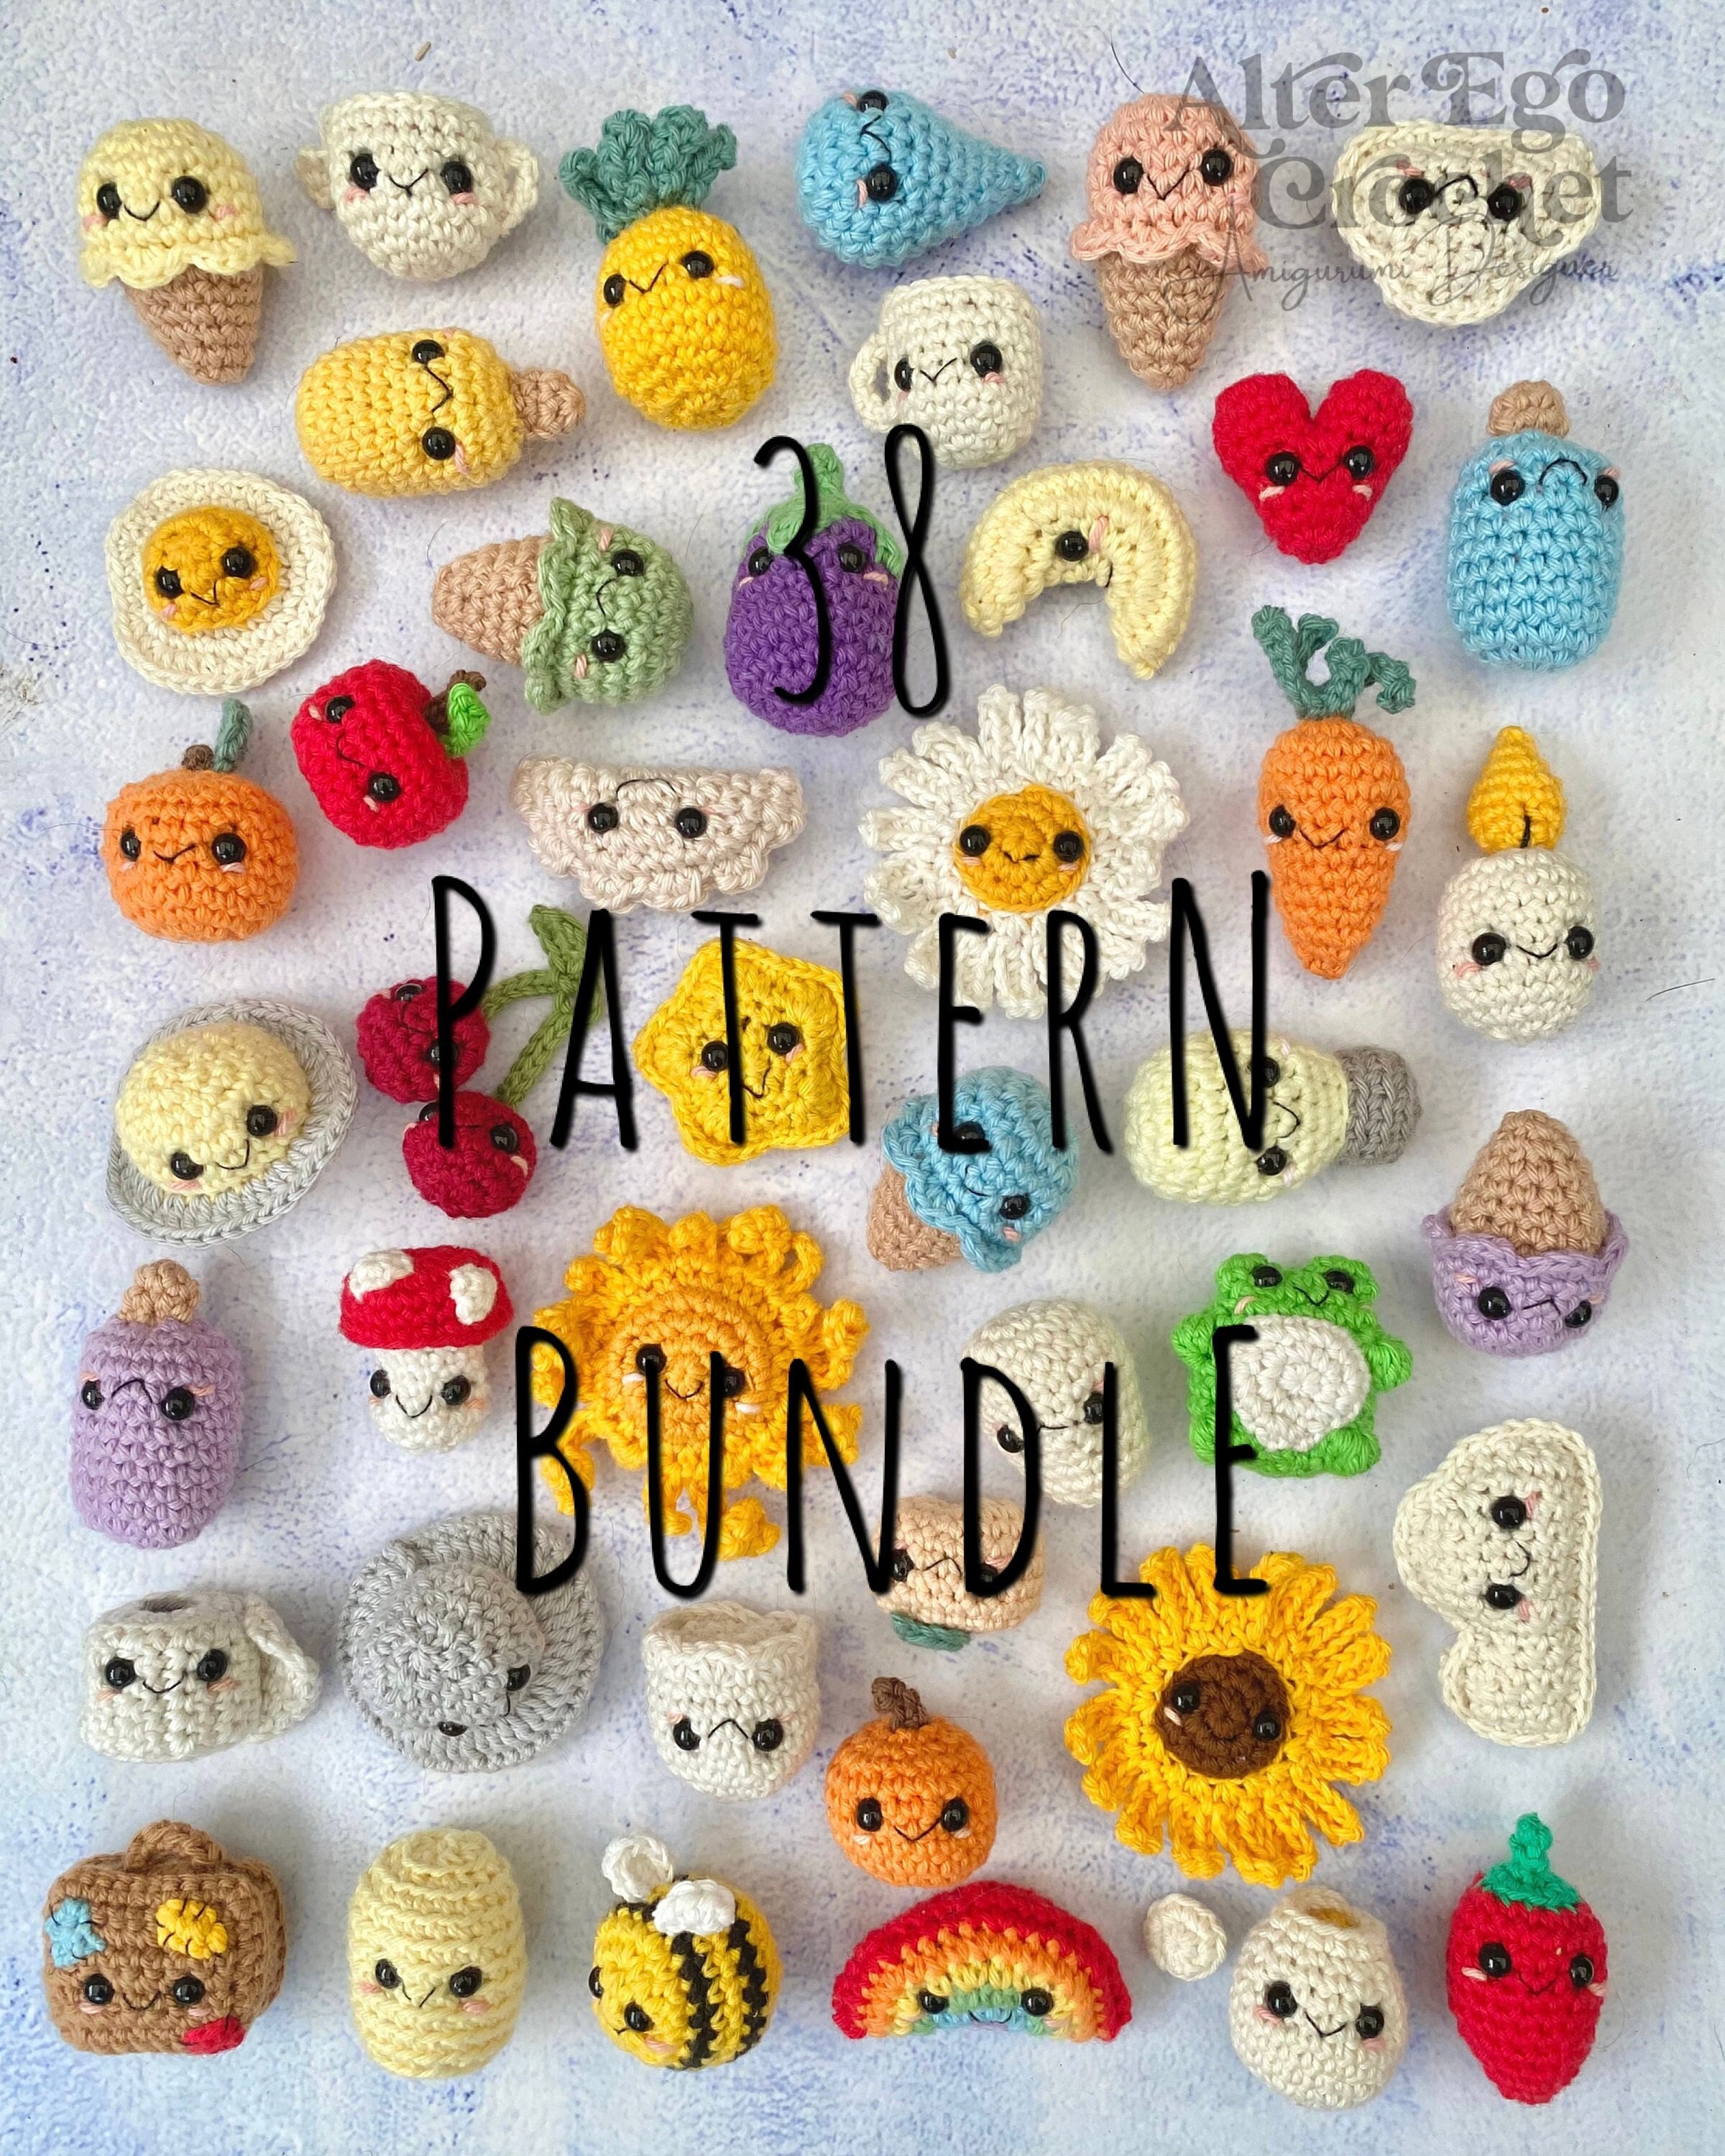 MINI Series PDF Crochet Amigurumi Patterns BUNDLE